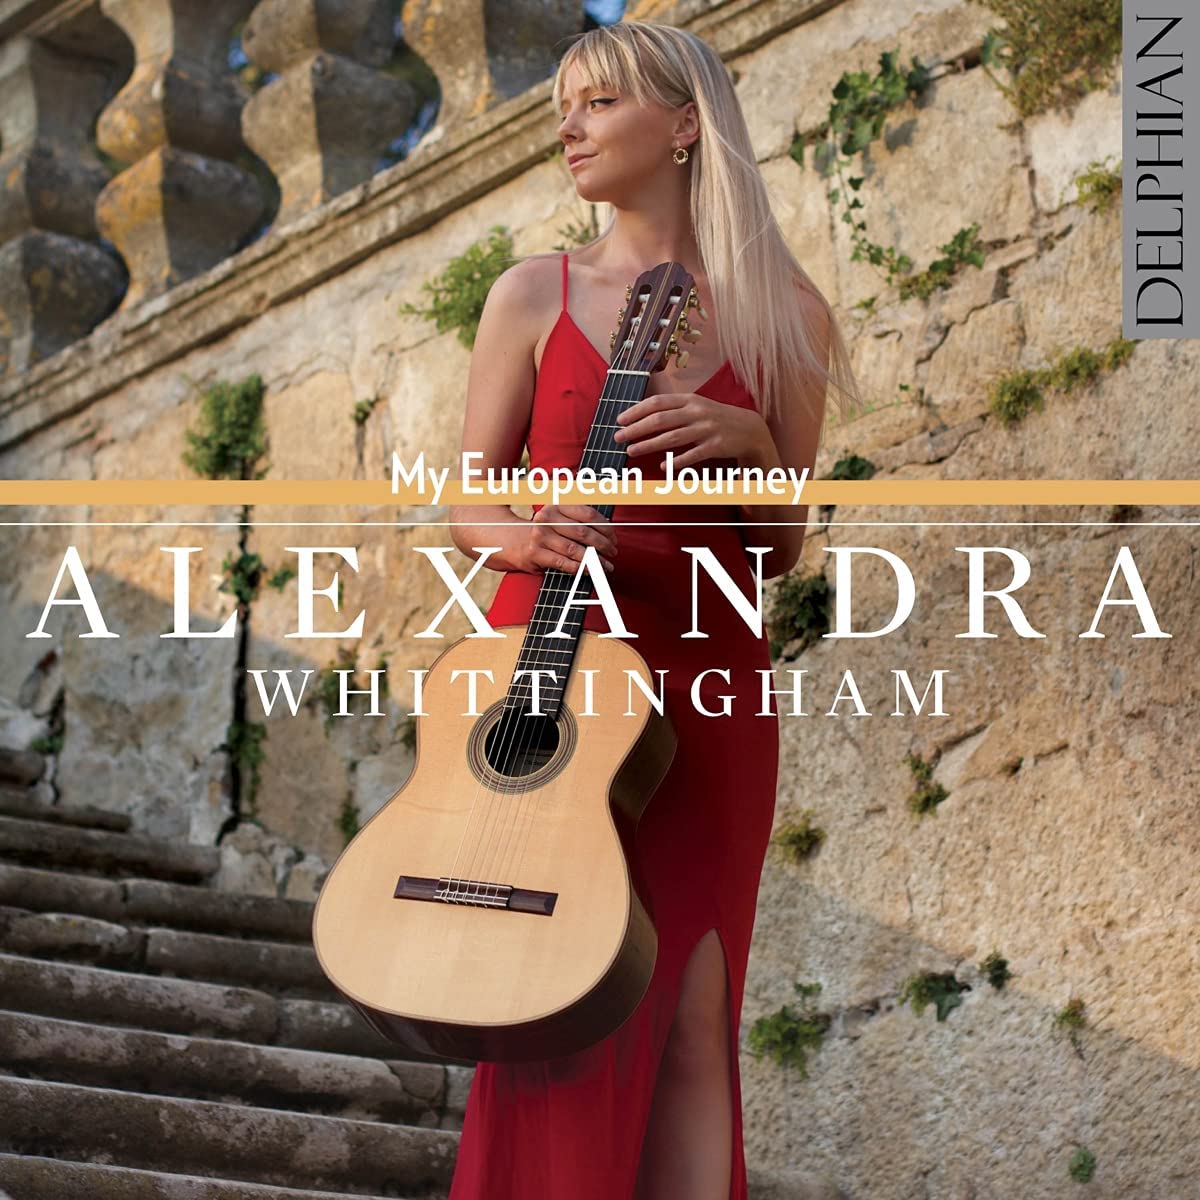 Alexandra Whittingham guitar